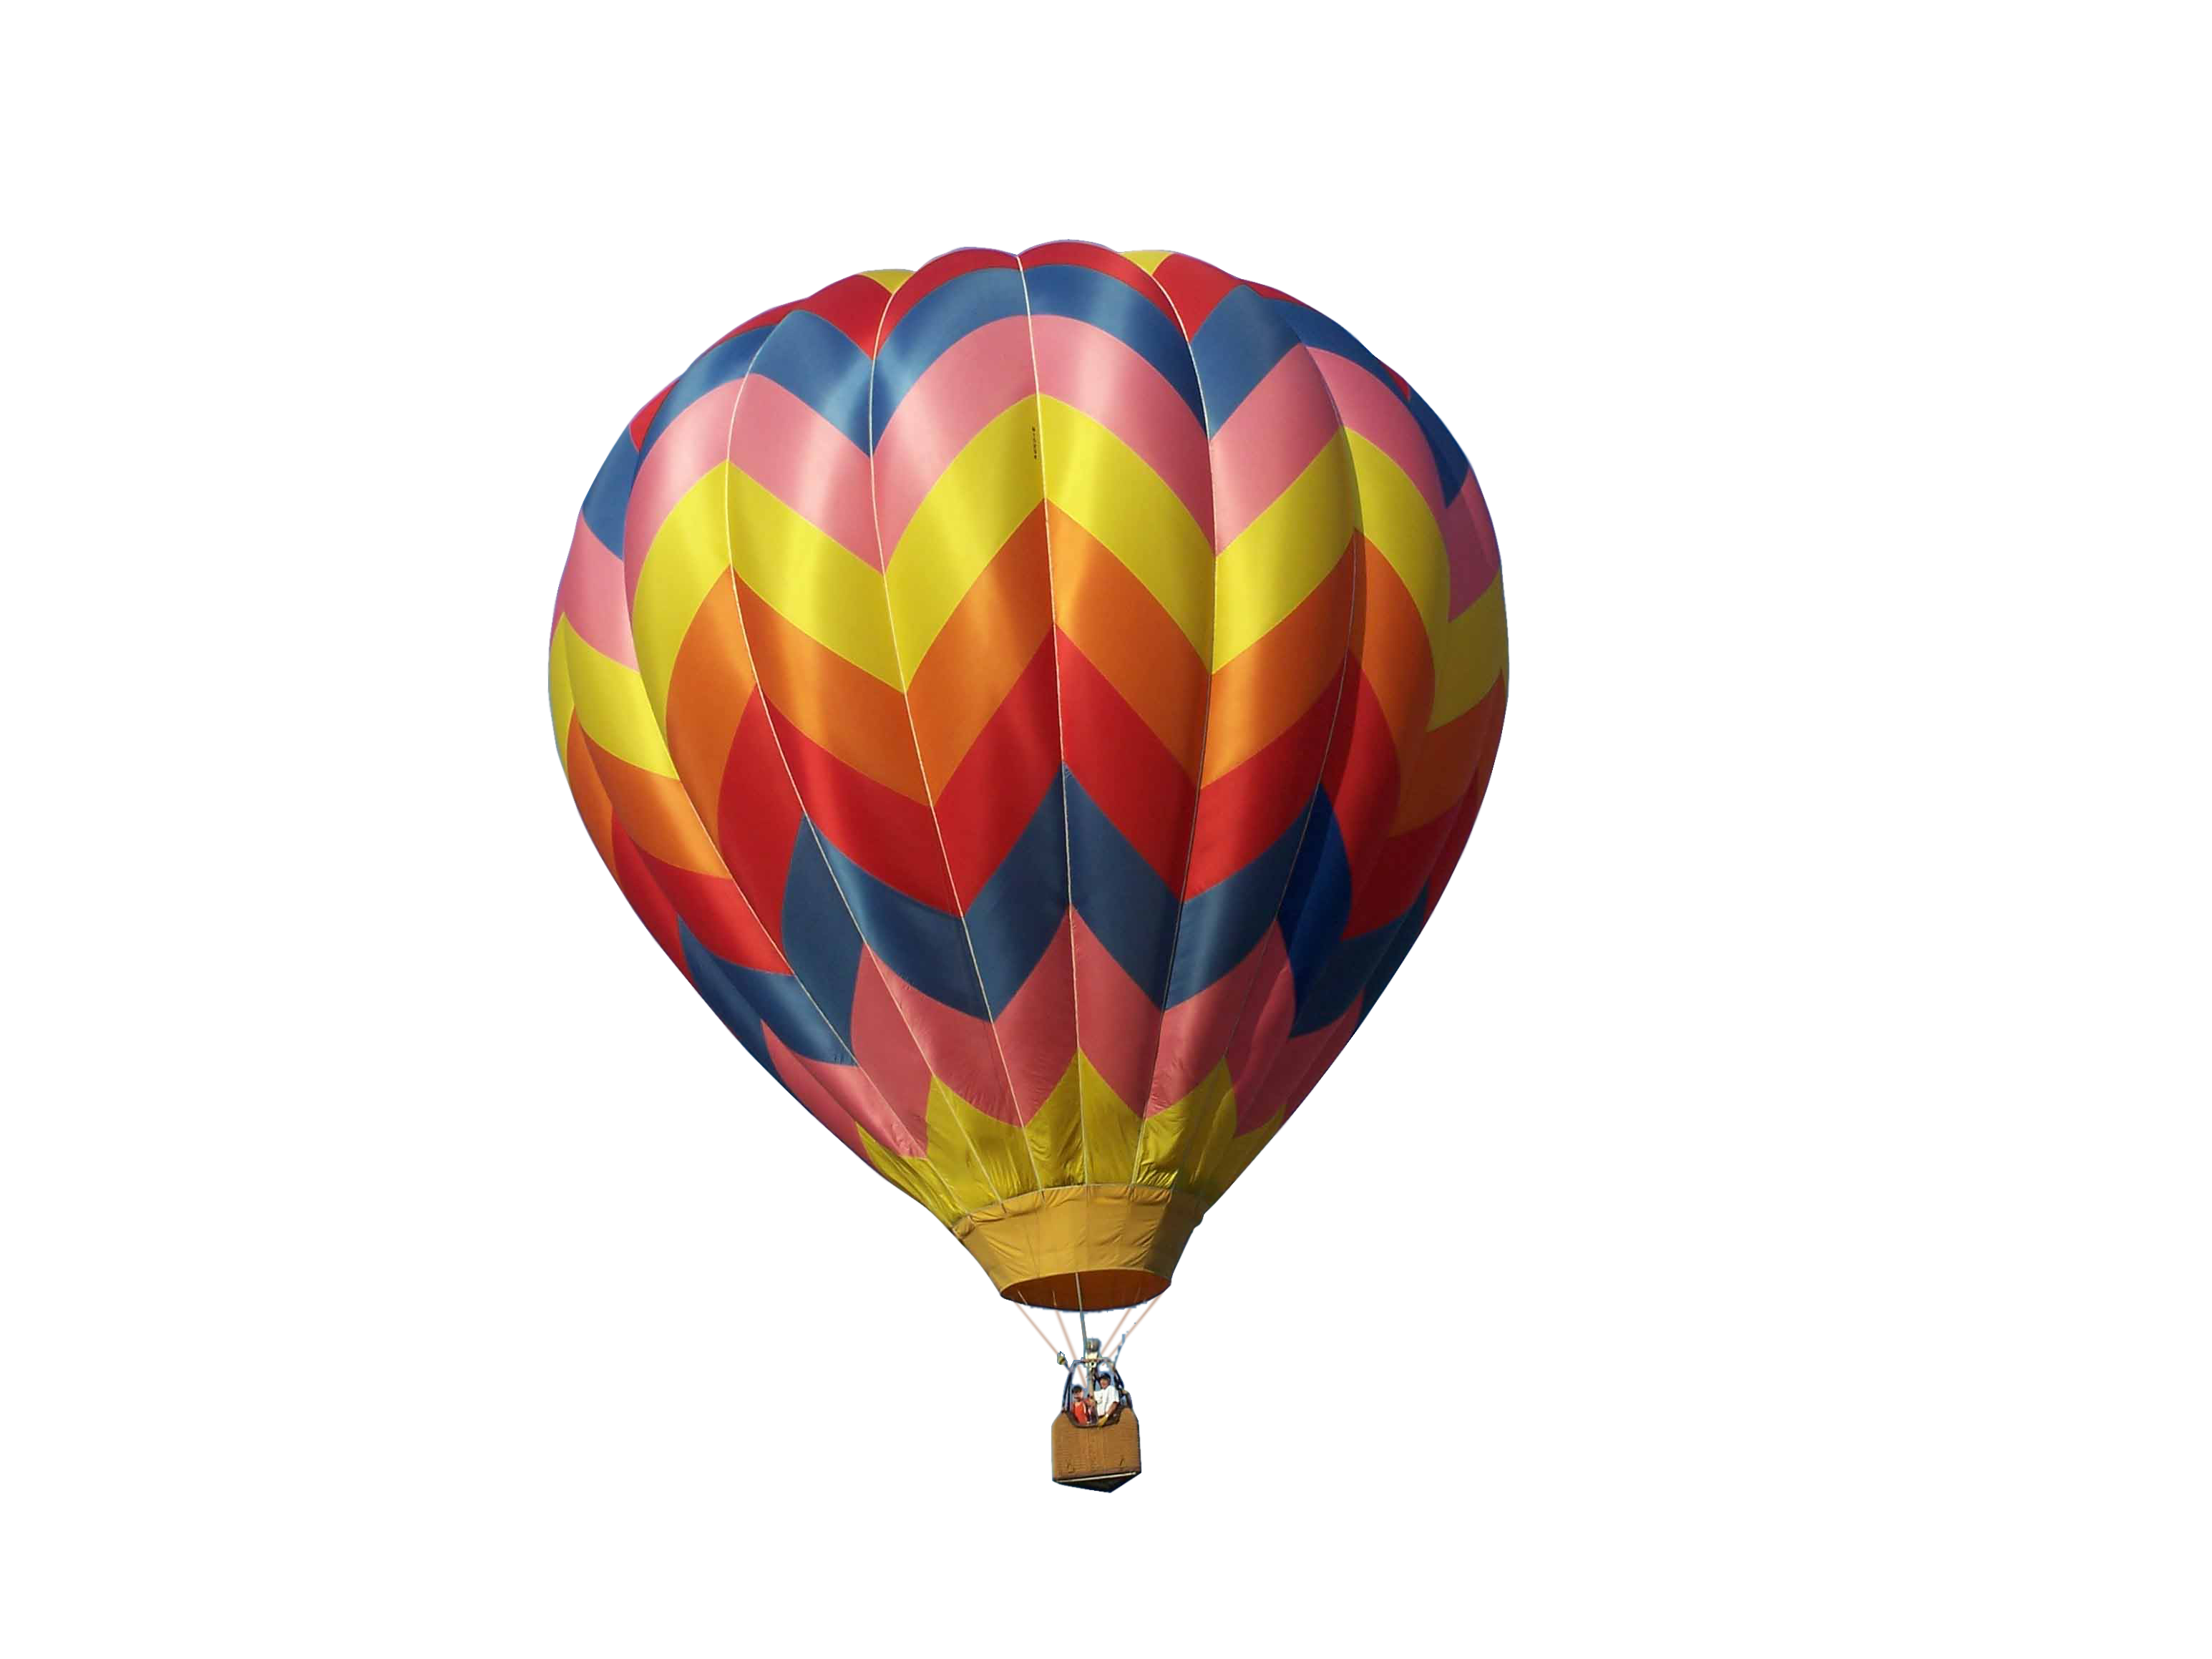 Hot Air Balloon PNG HD and HQ Image